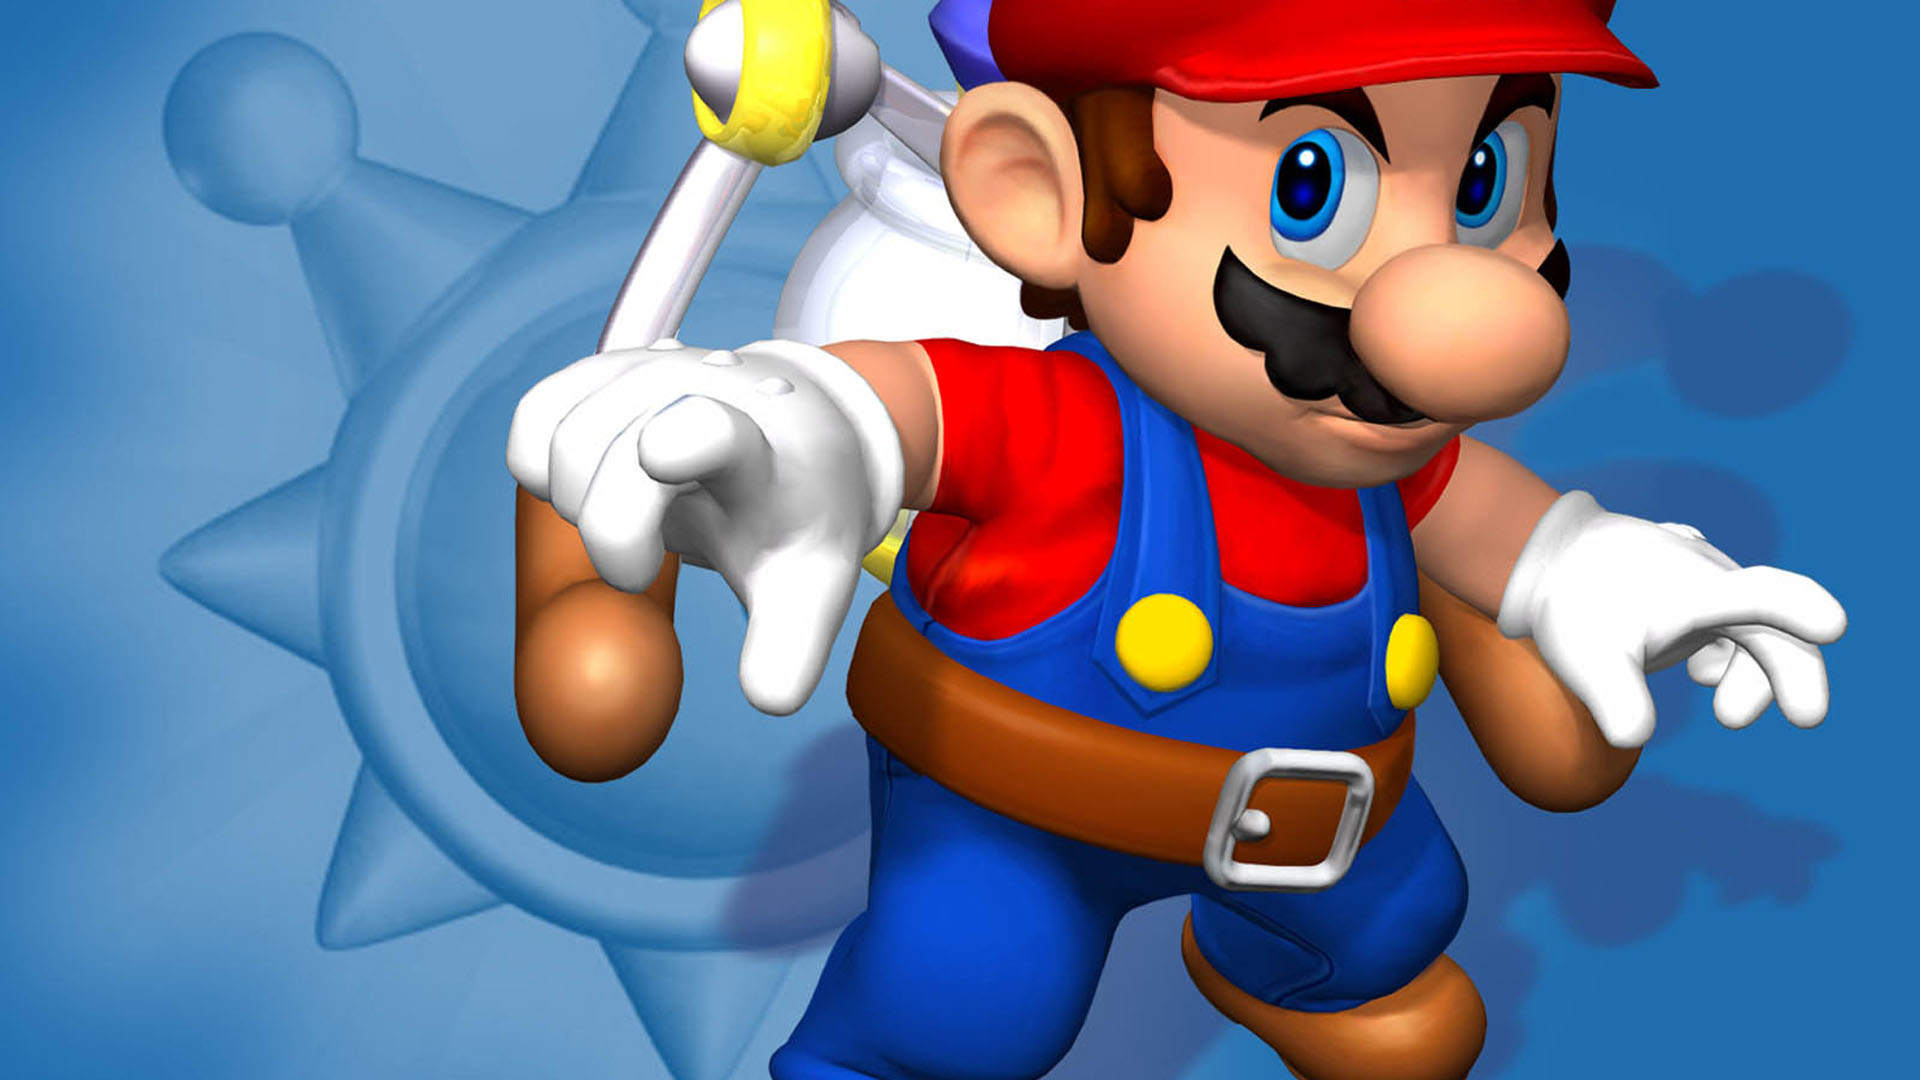 Mario bros theme. Супер Марио игра. Марио Саншайн. Марио (персонаж игр). Супер Марио супер Марио.